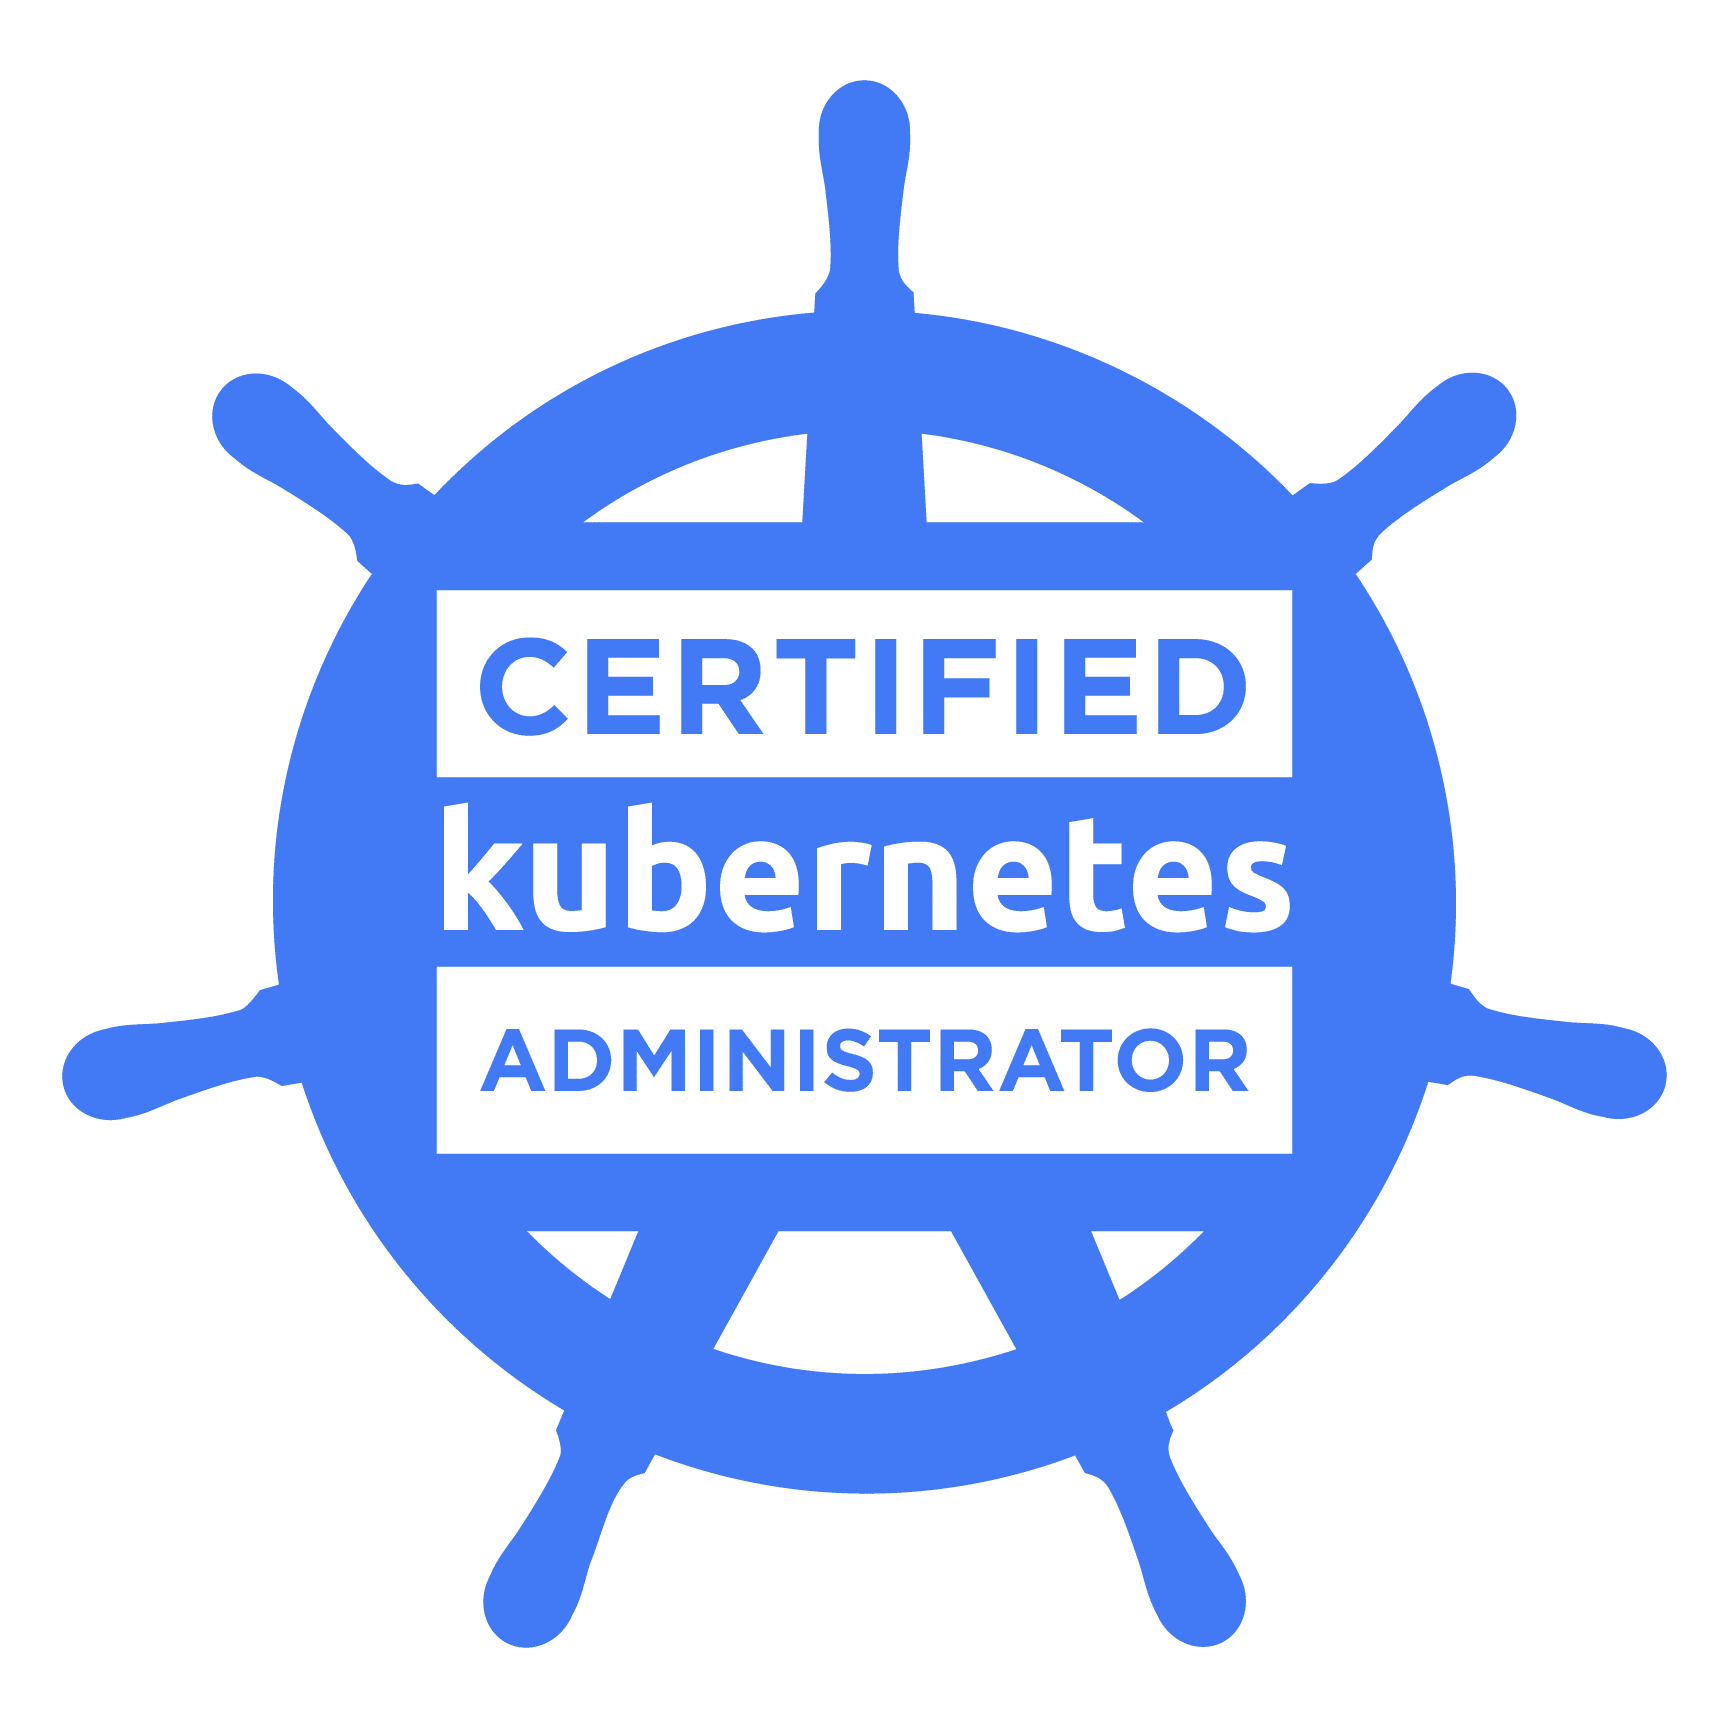 certified kubernetes administrator image